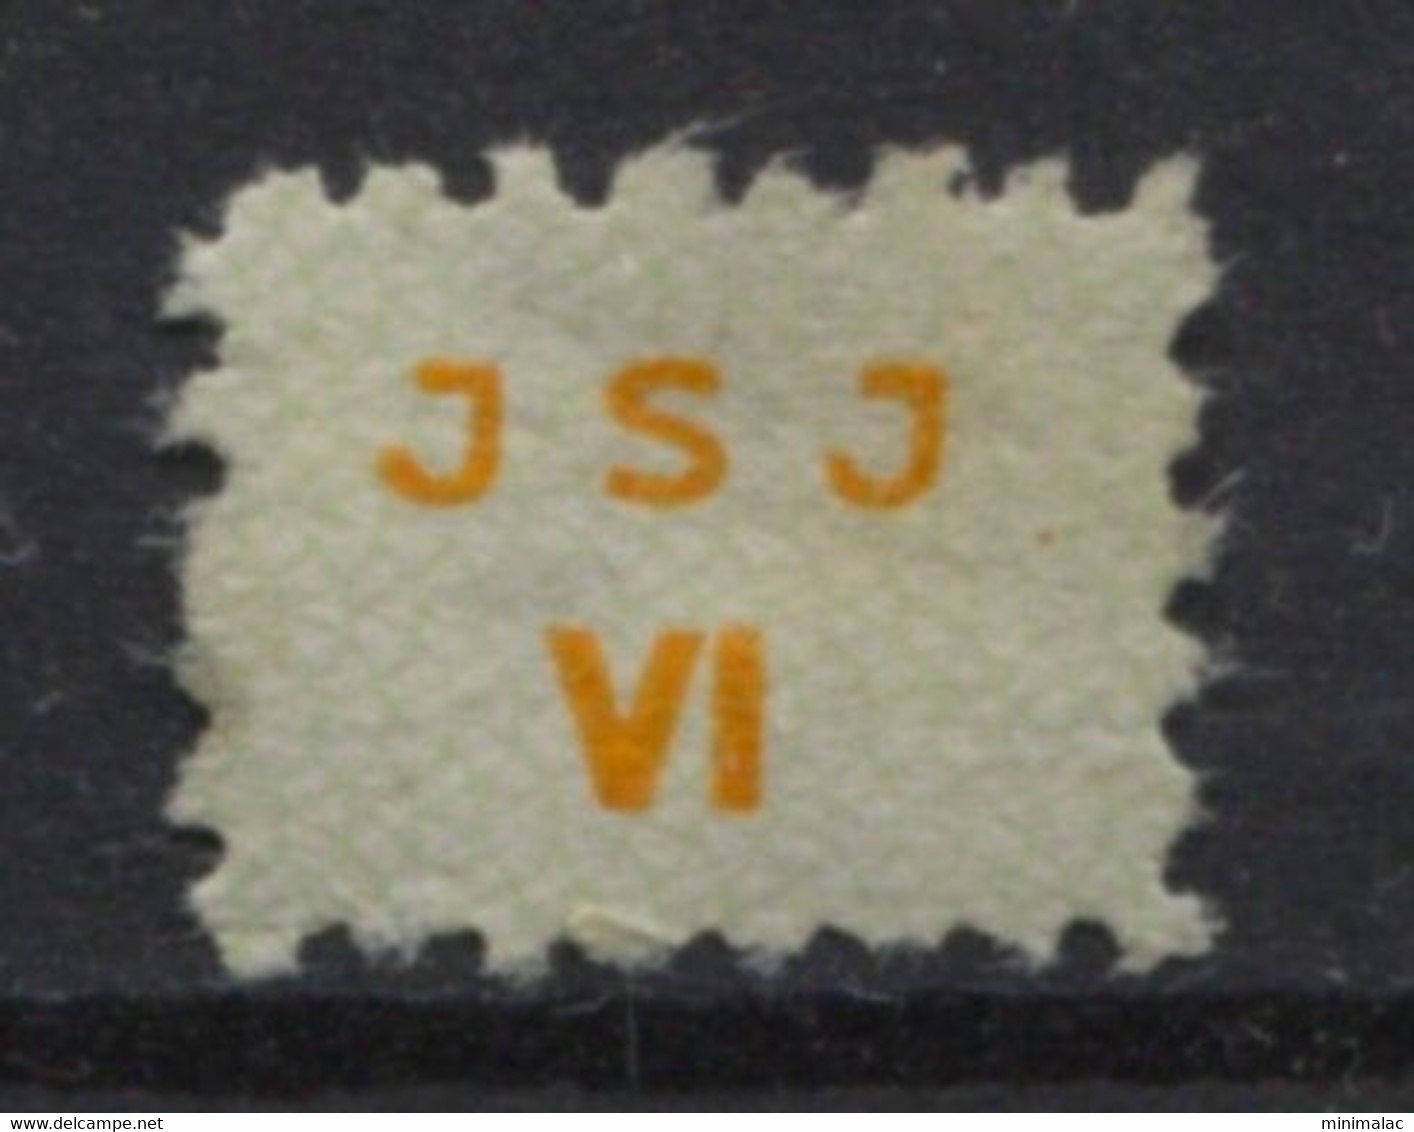 Yugoslavia 1947, Stamp For Membership, JSJ, Labor Union, Administrative Stamp - Revenue, Tax Stamp, VI - Service